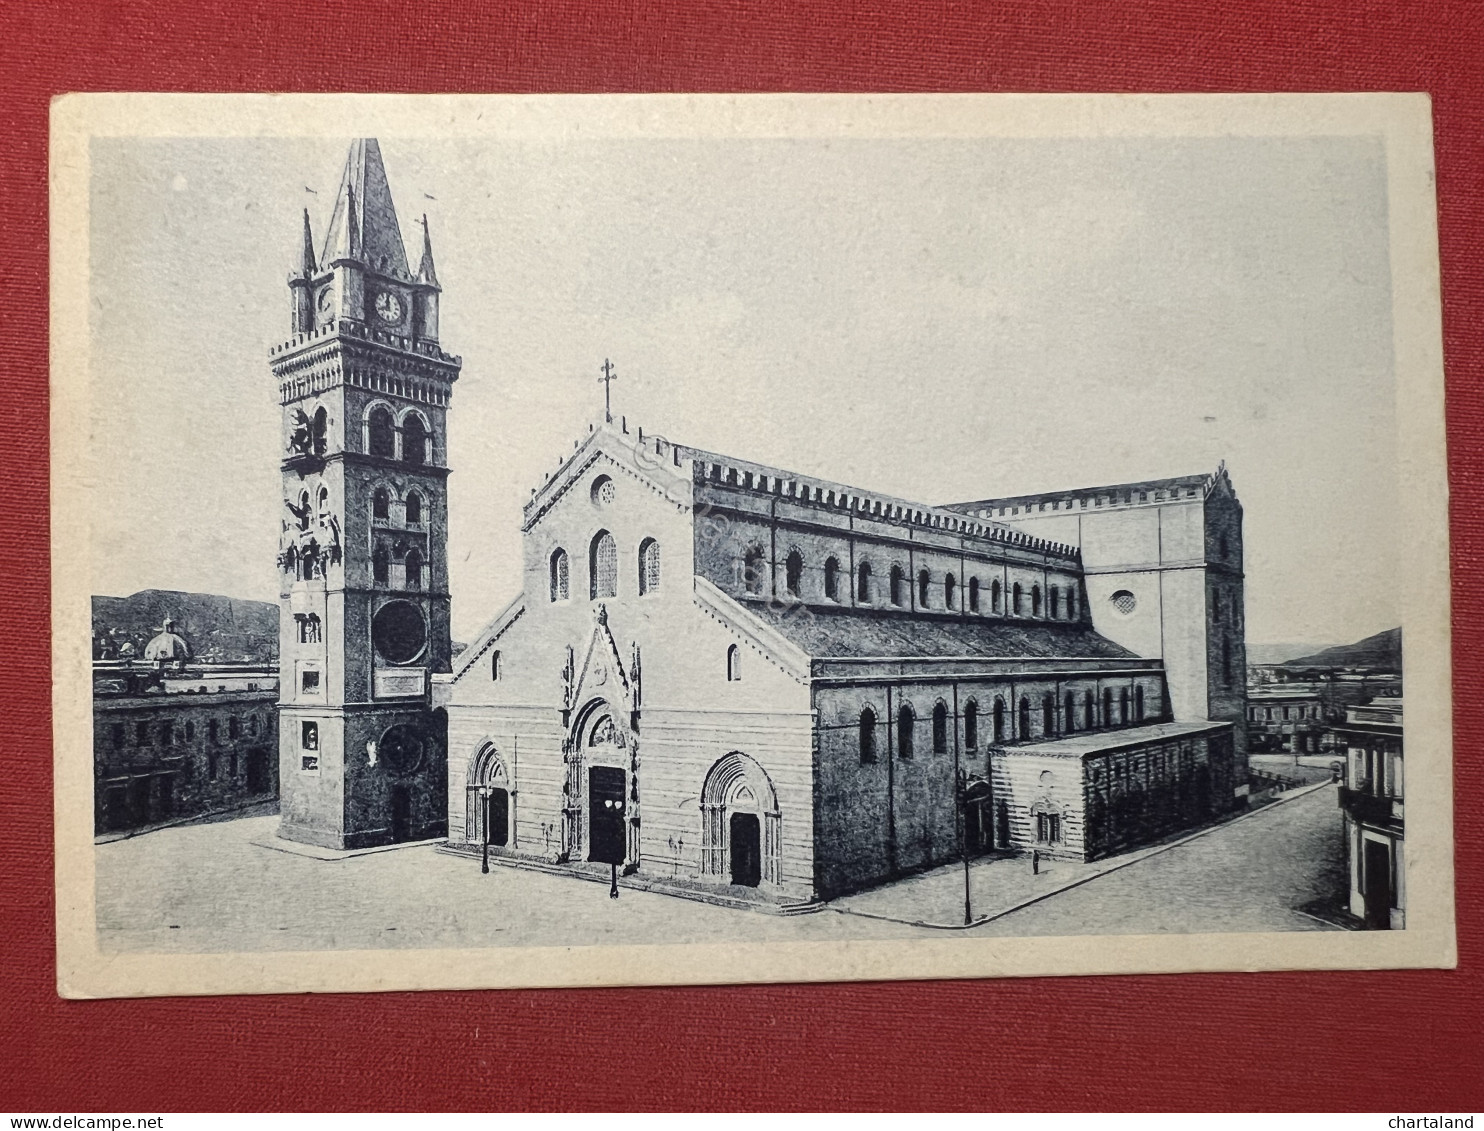 Cartolina - Messina - La Cattedrale - 1943 - Messina